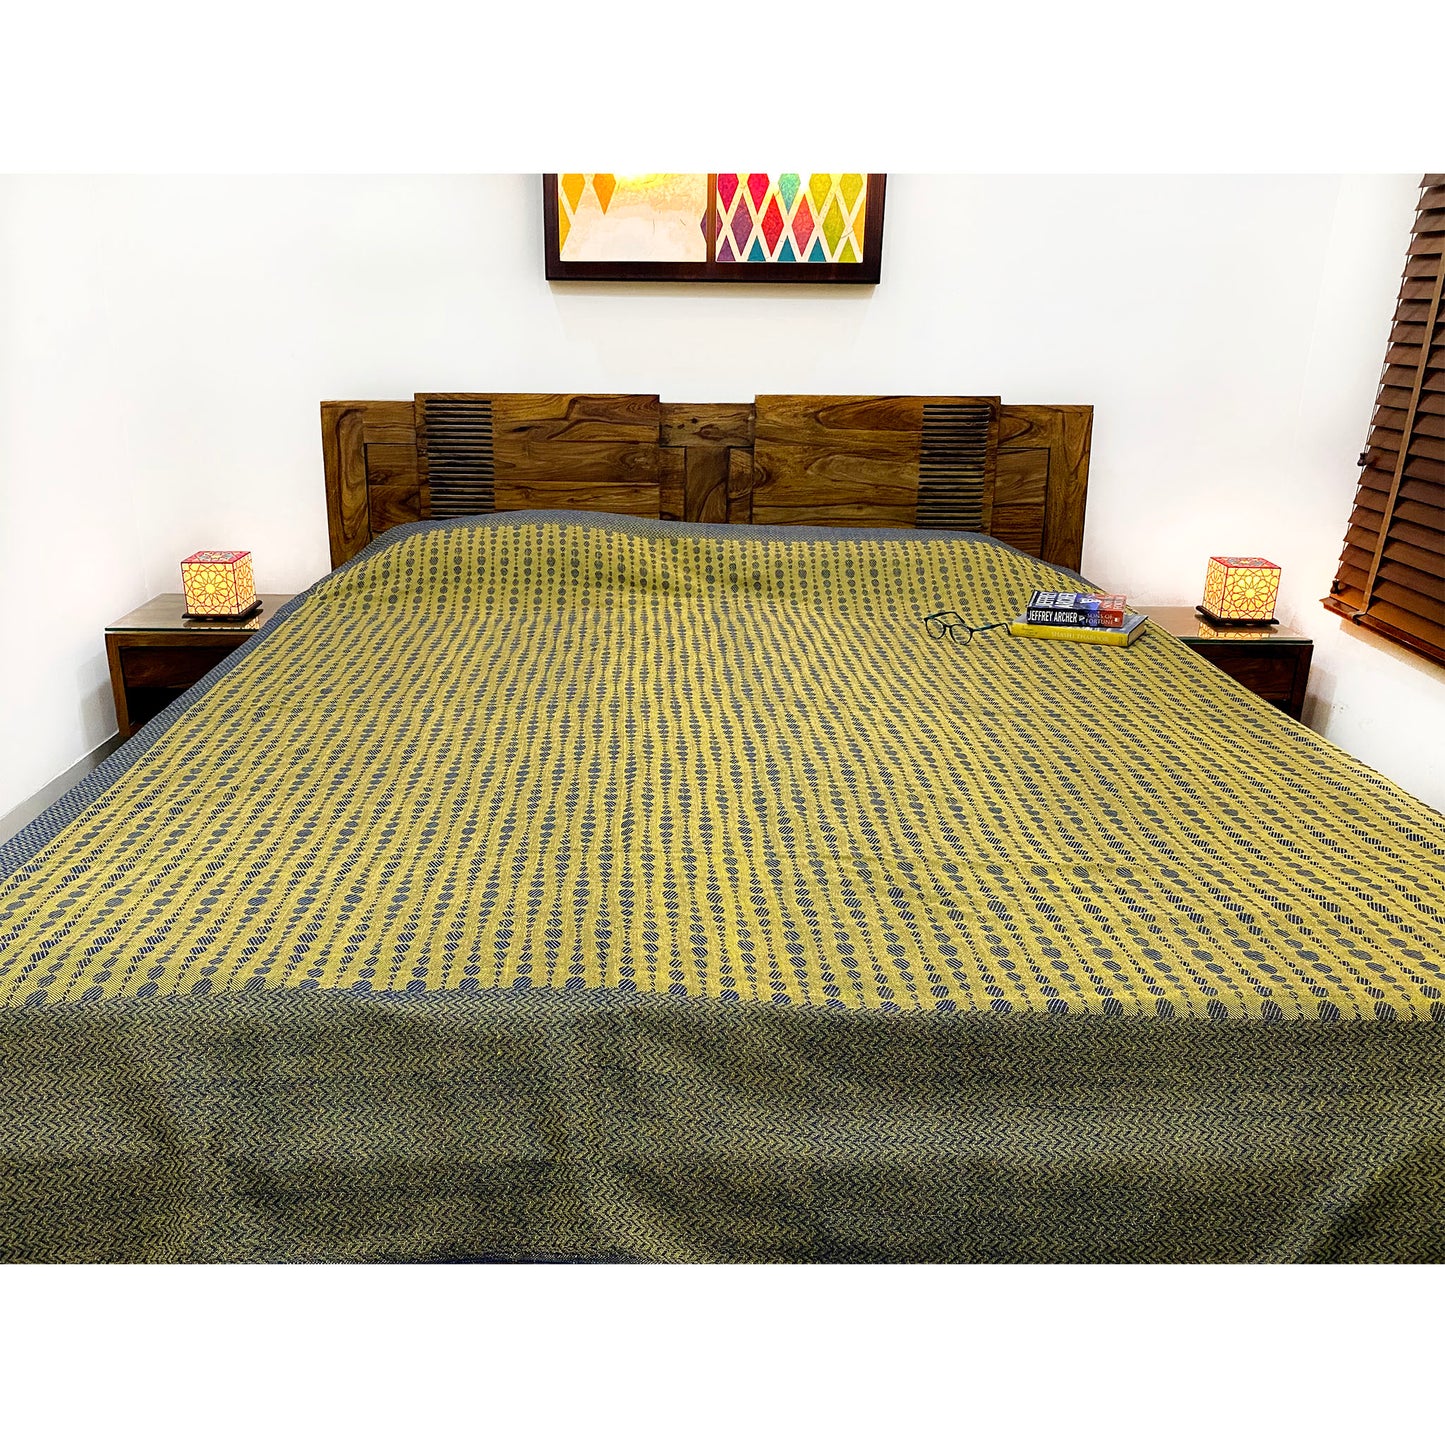 Reversible Kaffir Lime Handloom Bed Cover